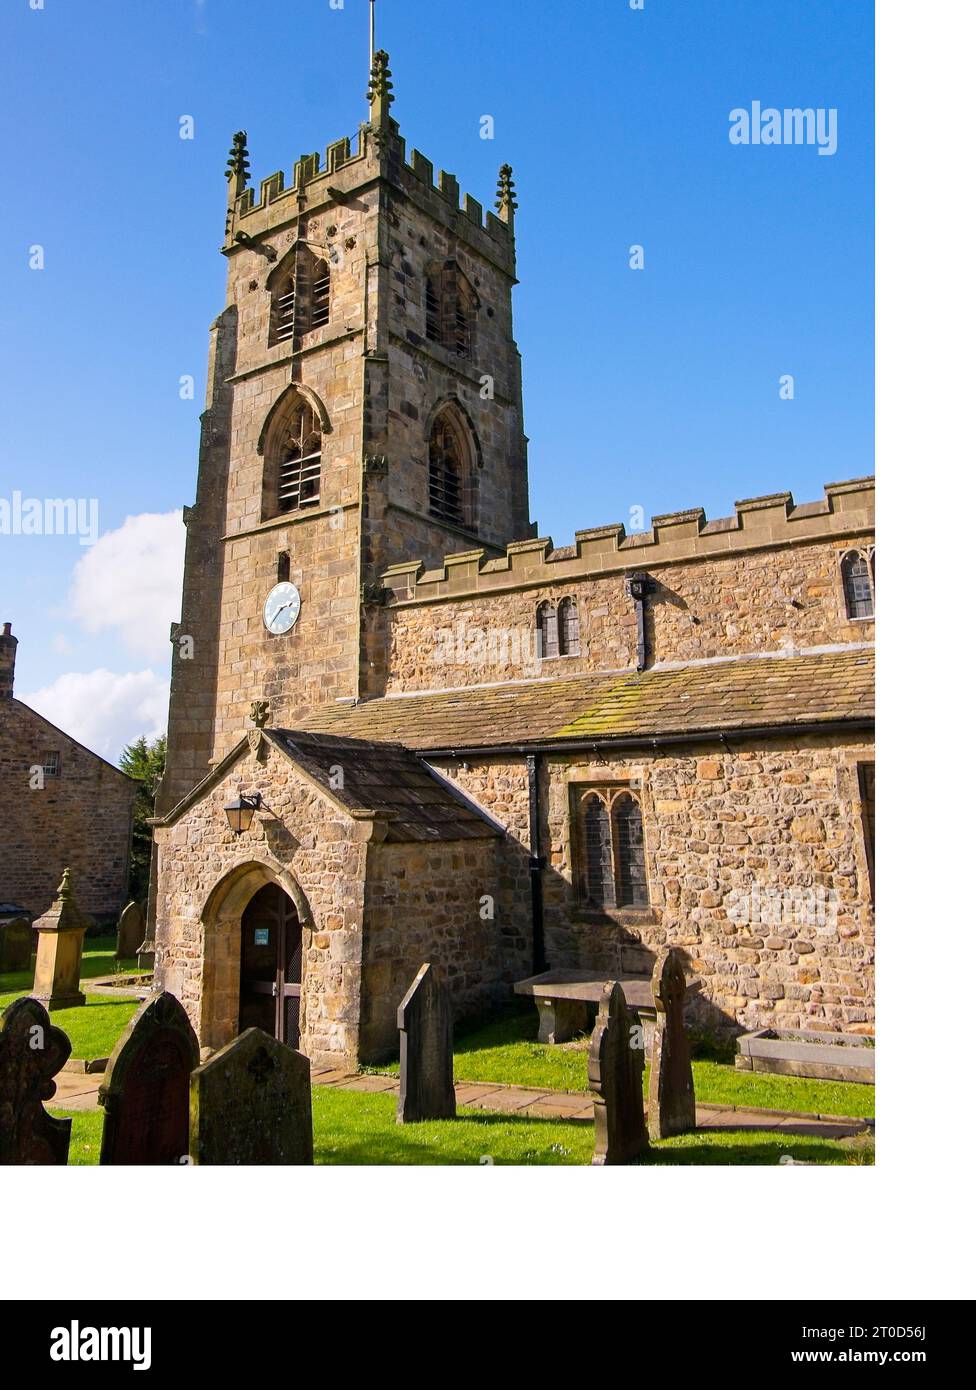 Bolton by Bowland, Ribble Valley, Lancashire St. Peter und St. Paul's Anglican Church, Turm mit Uhr und Haupteingang Veranda, Stockfoto